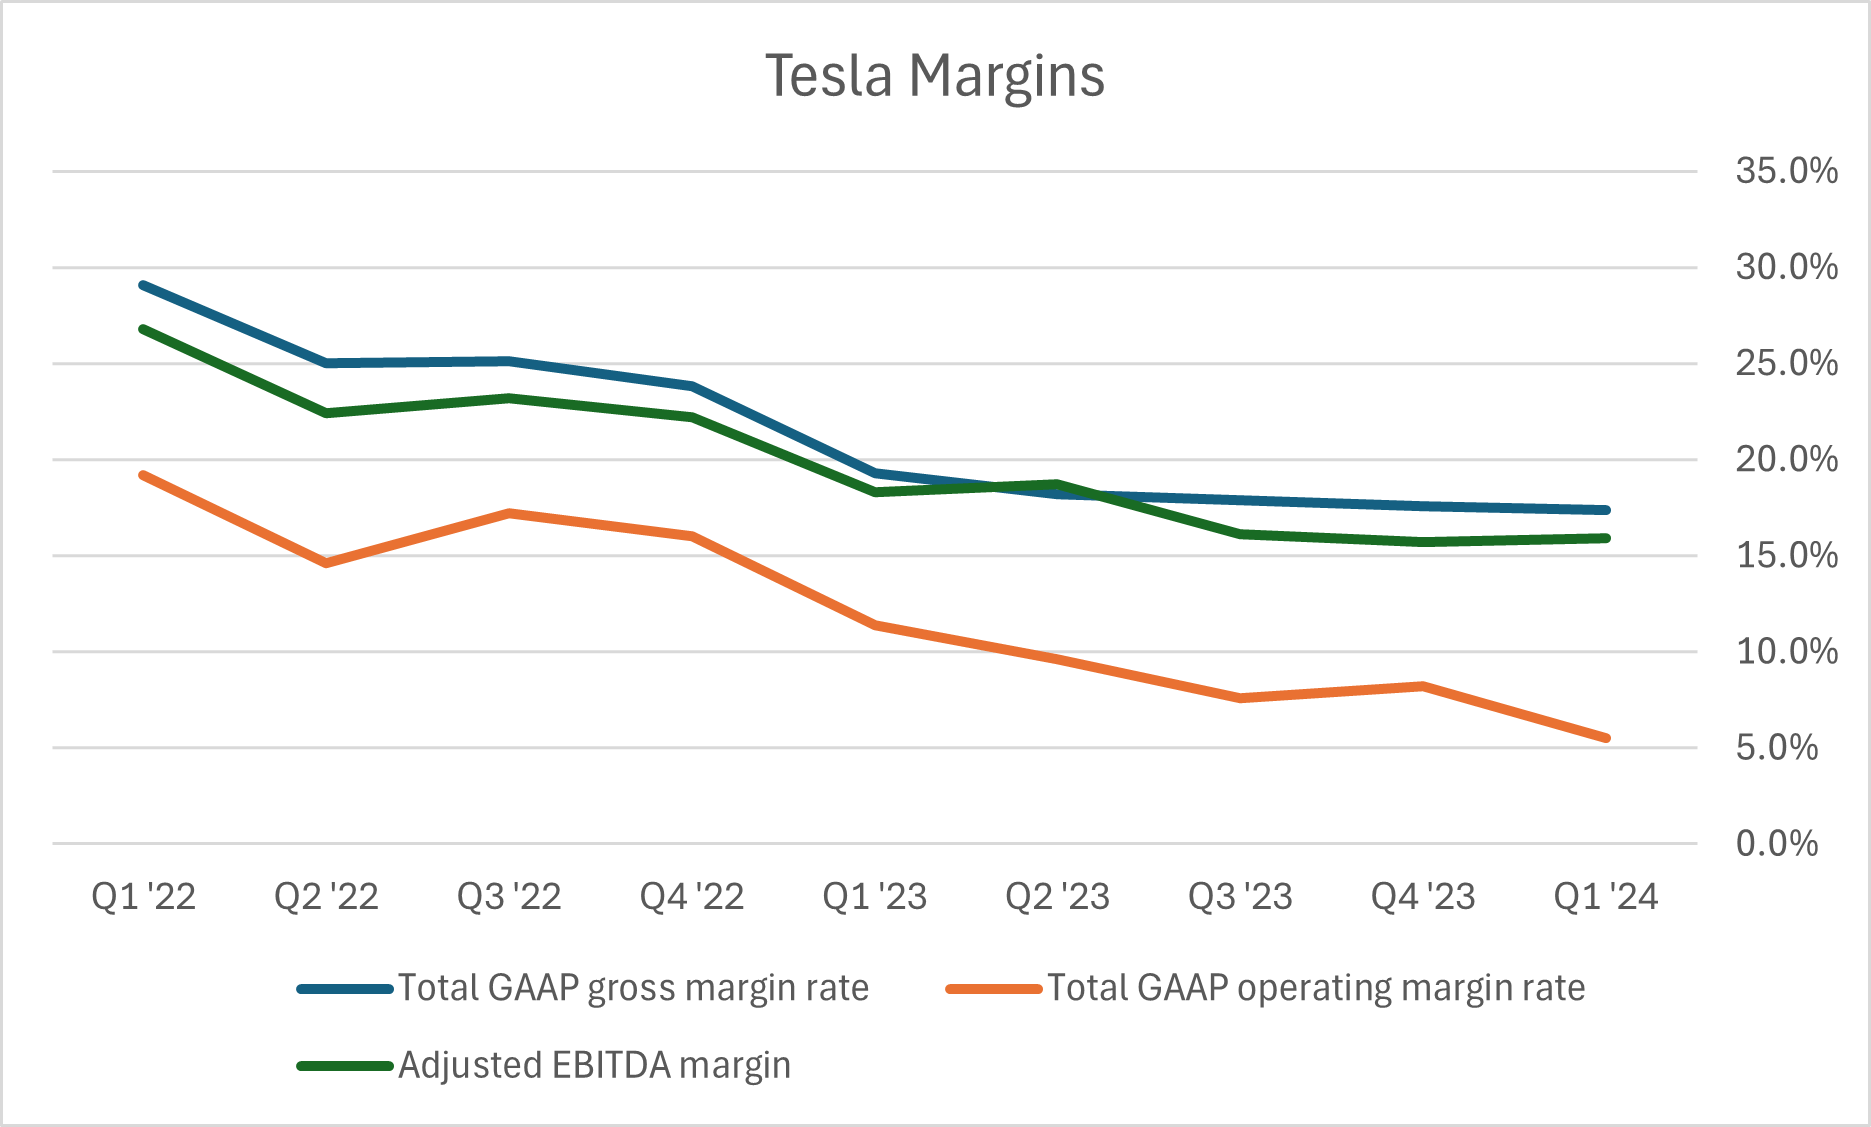 Tesla's declining margins